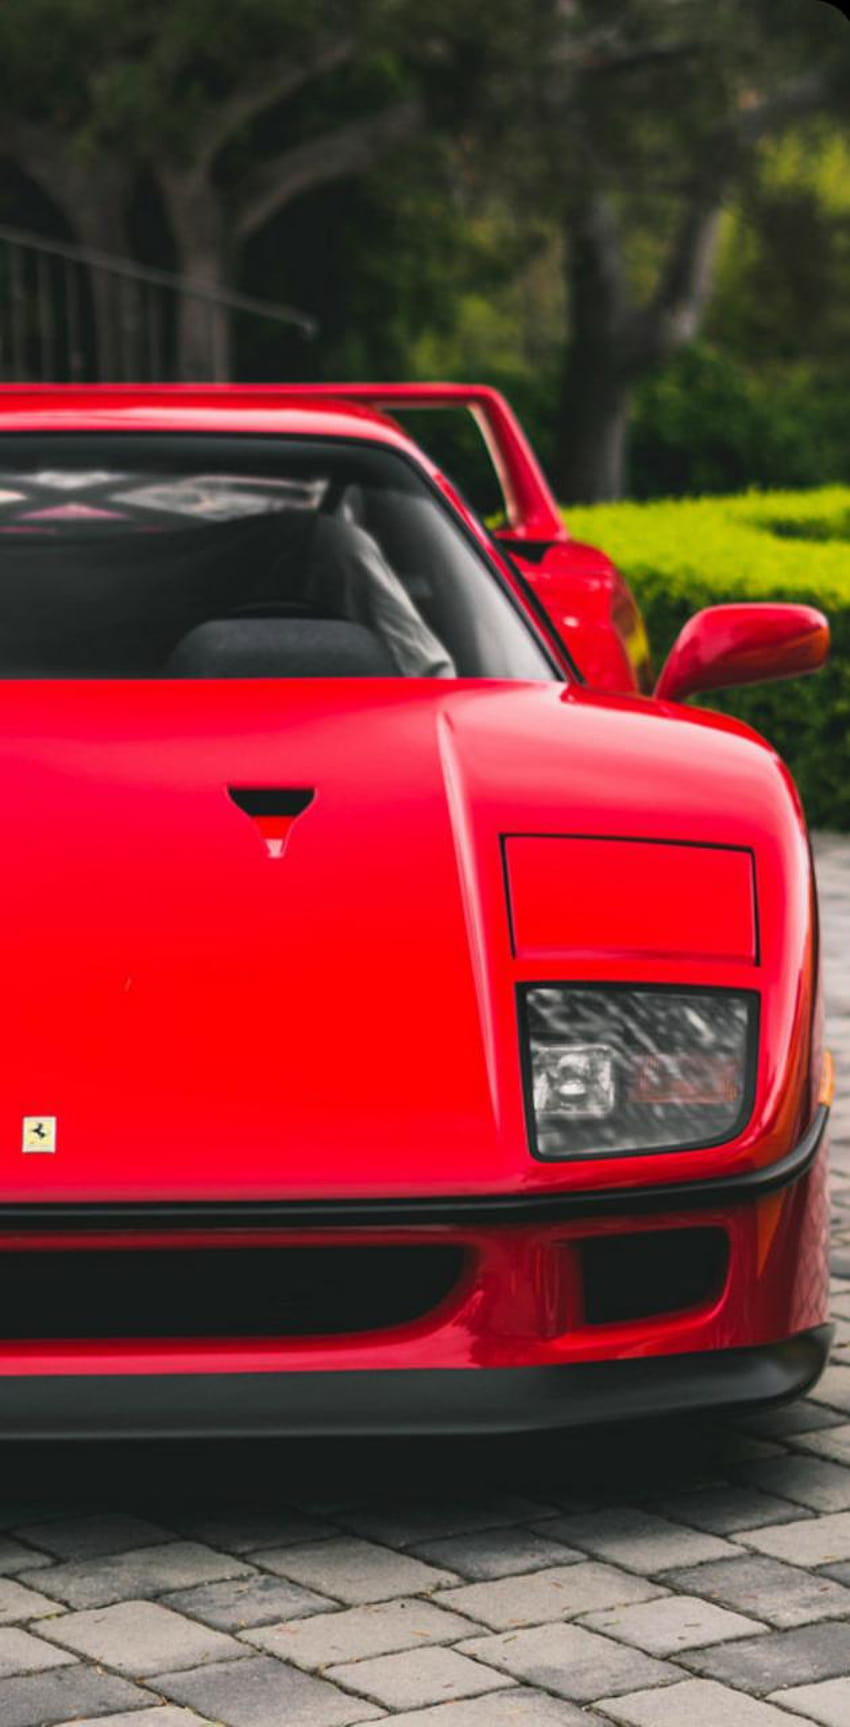 Ferrari clásico de AbdxllahM, ferrari clásico fondo de pantalla del teléfono